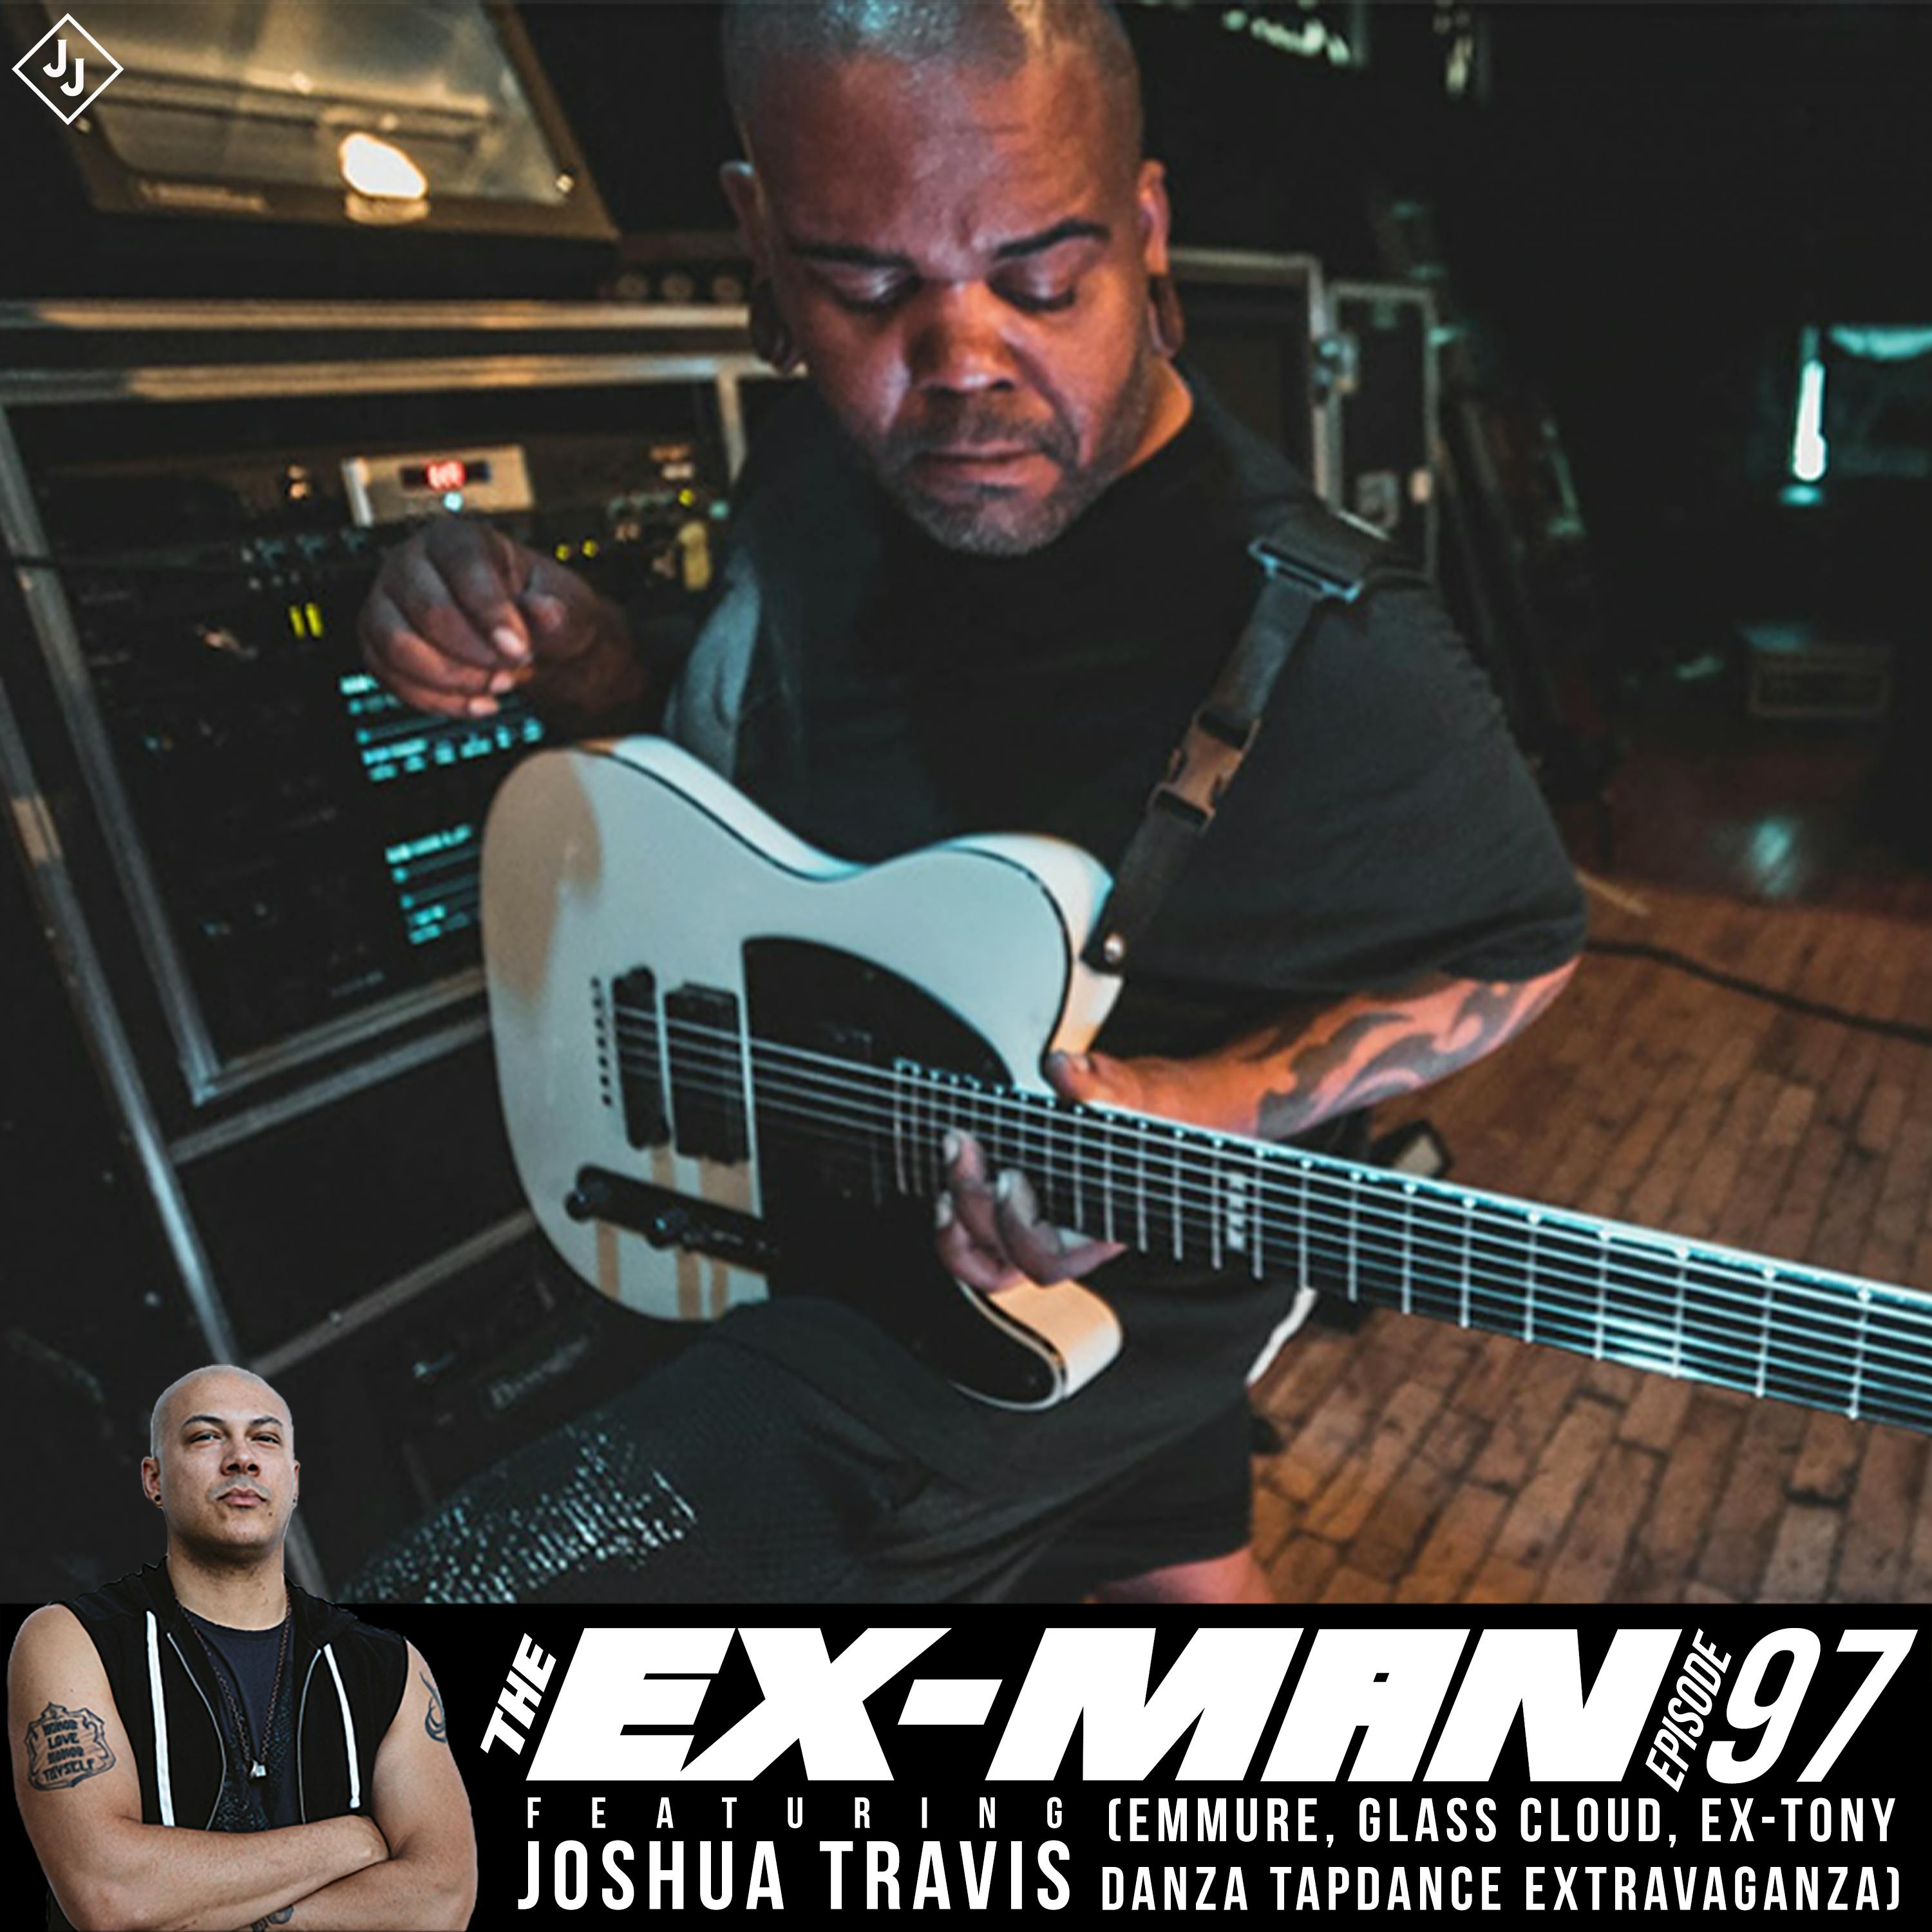 Joshua Travis (Emmure, Glass Cloud, ex-Tony Danza Tapdance Extravaganza)